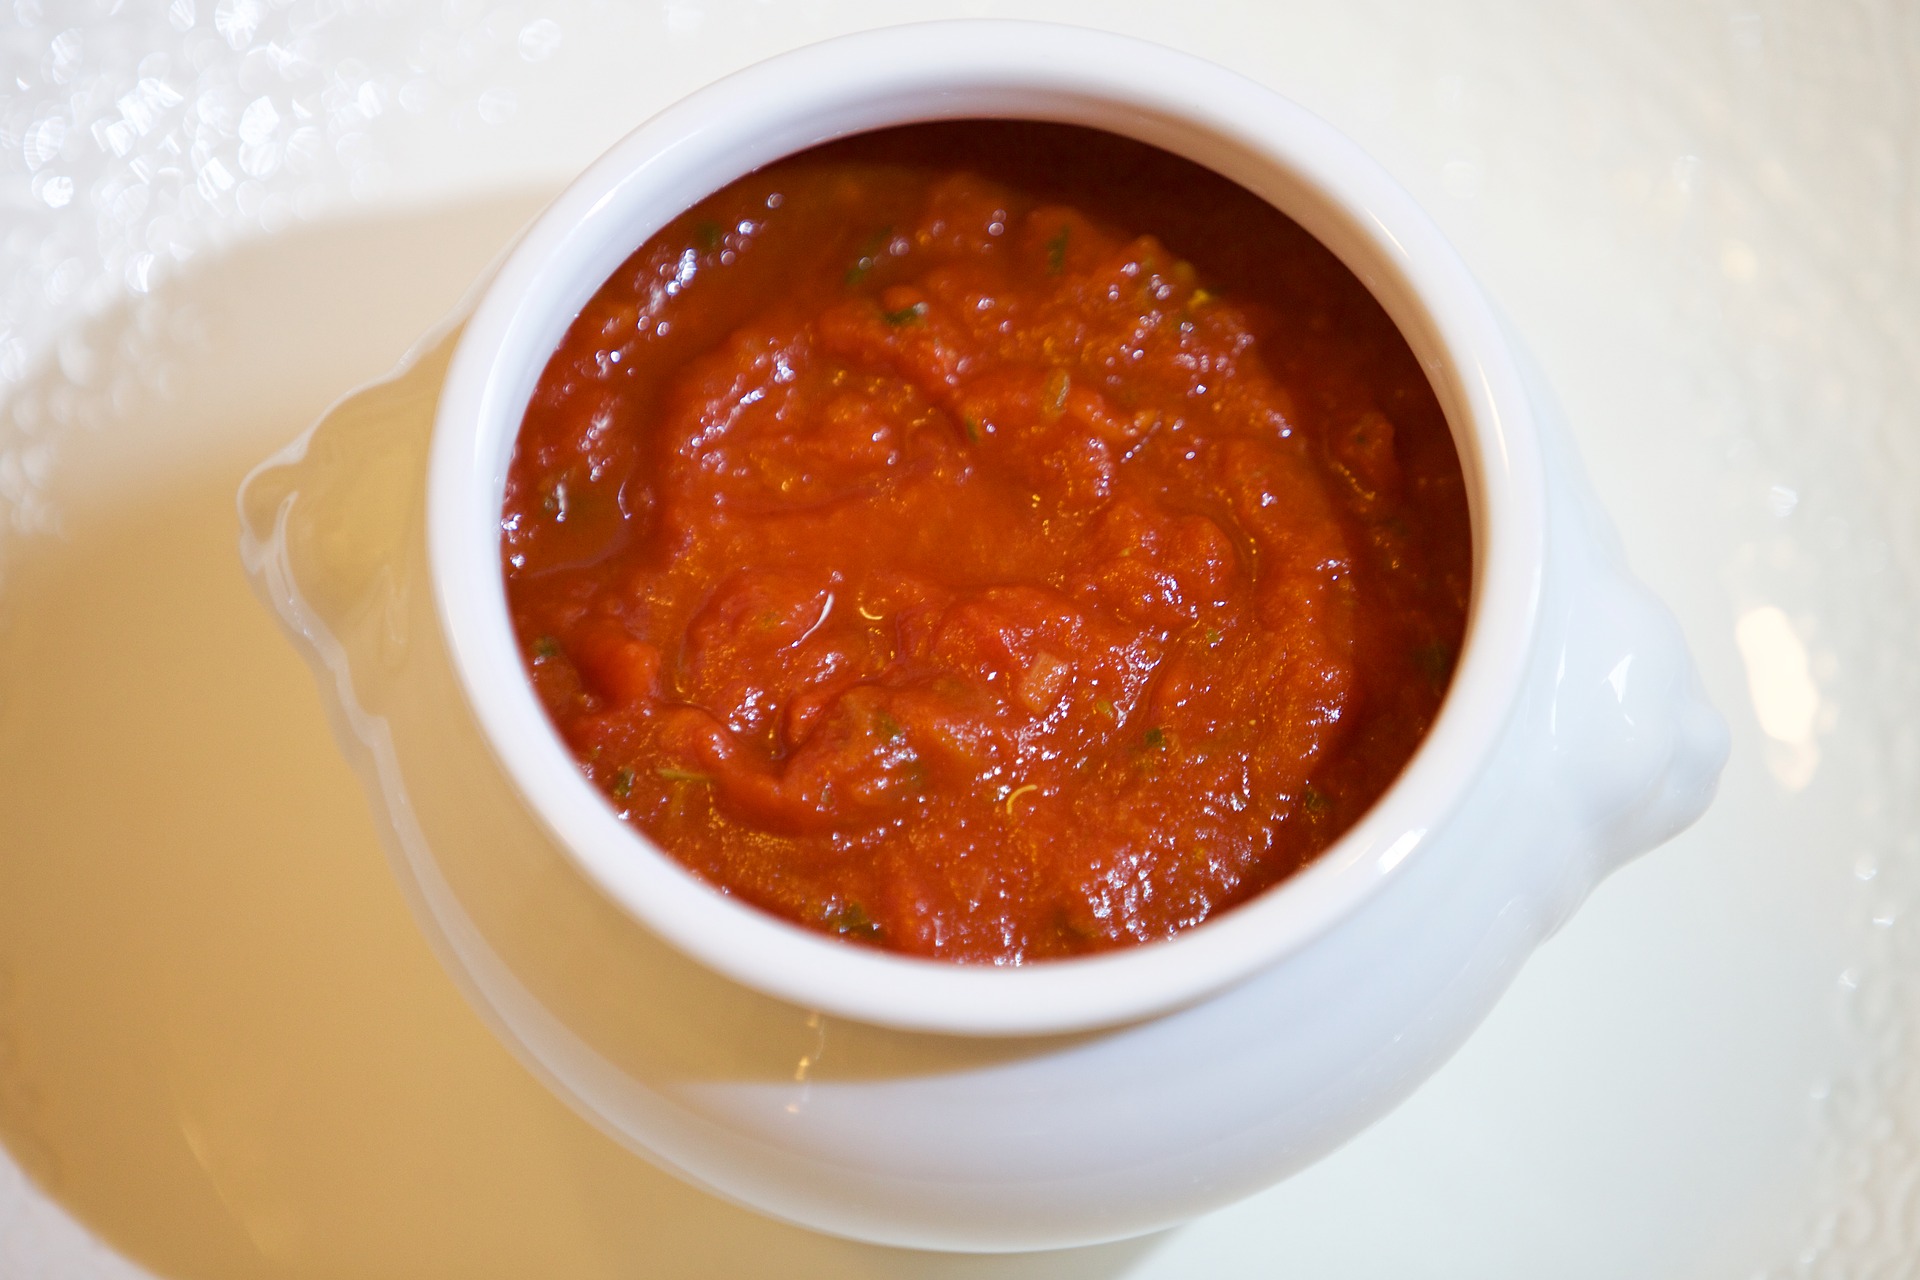 tomato-sauce-2729689_1920